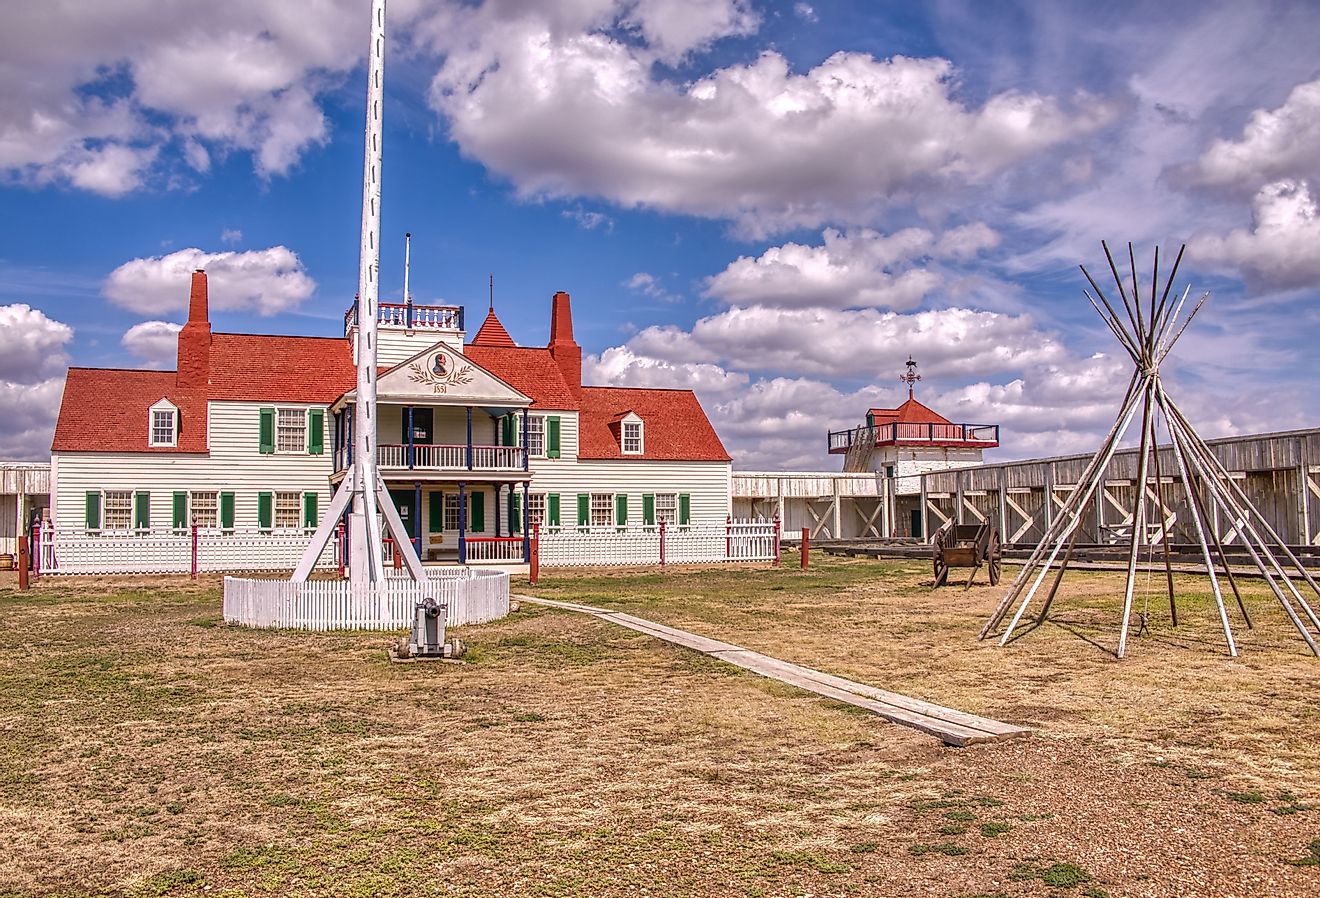 Fort Union Trading Post National Historic Site near Williston, North Dakota.